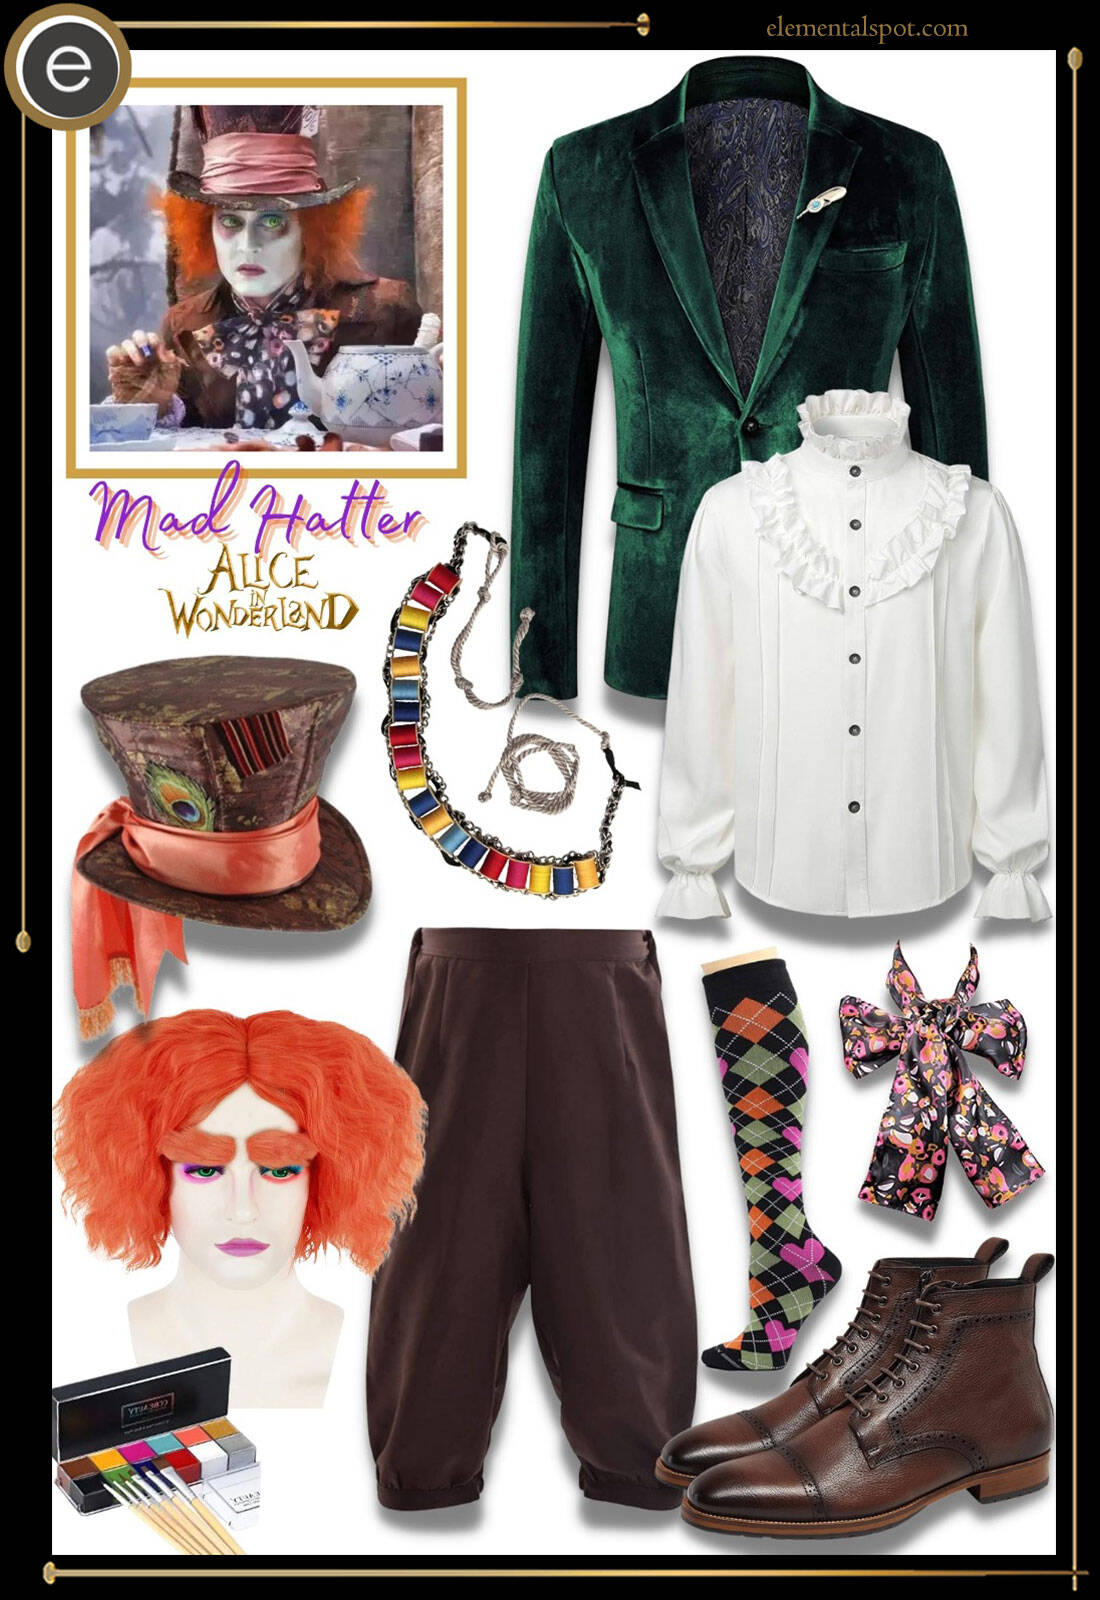 costume-Mad Hatter-Alice in Wonderland